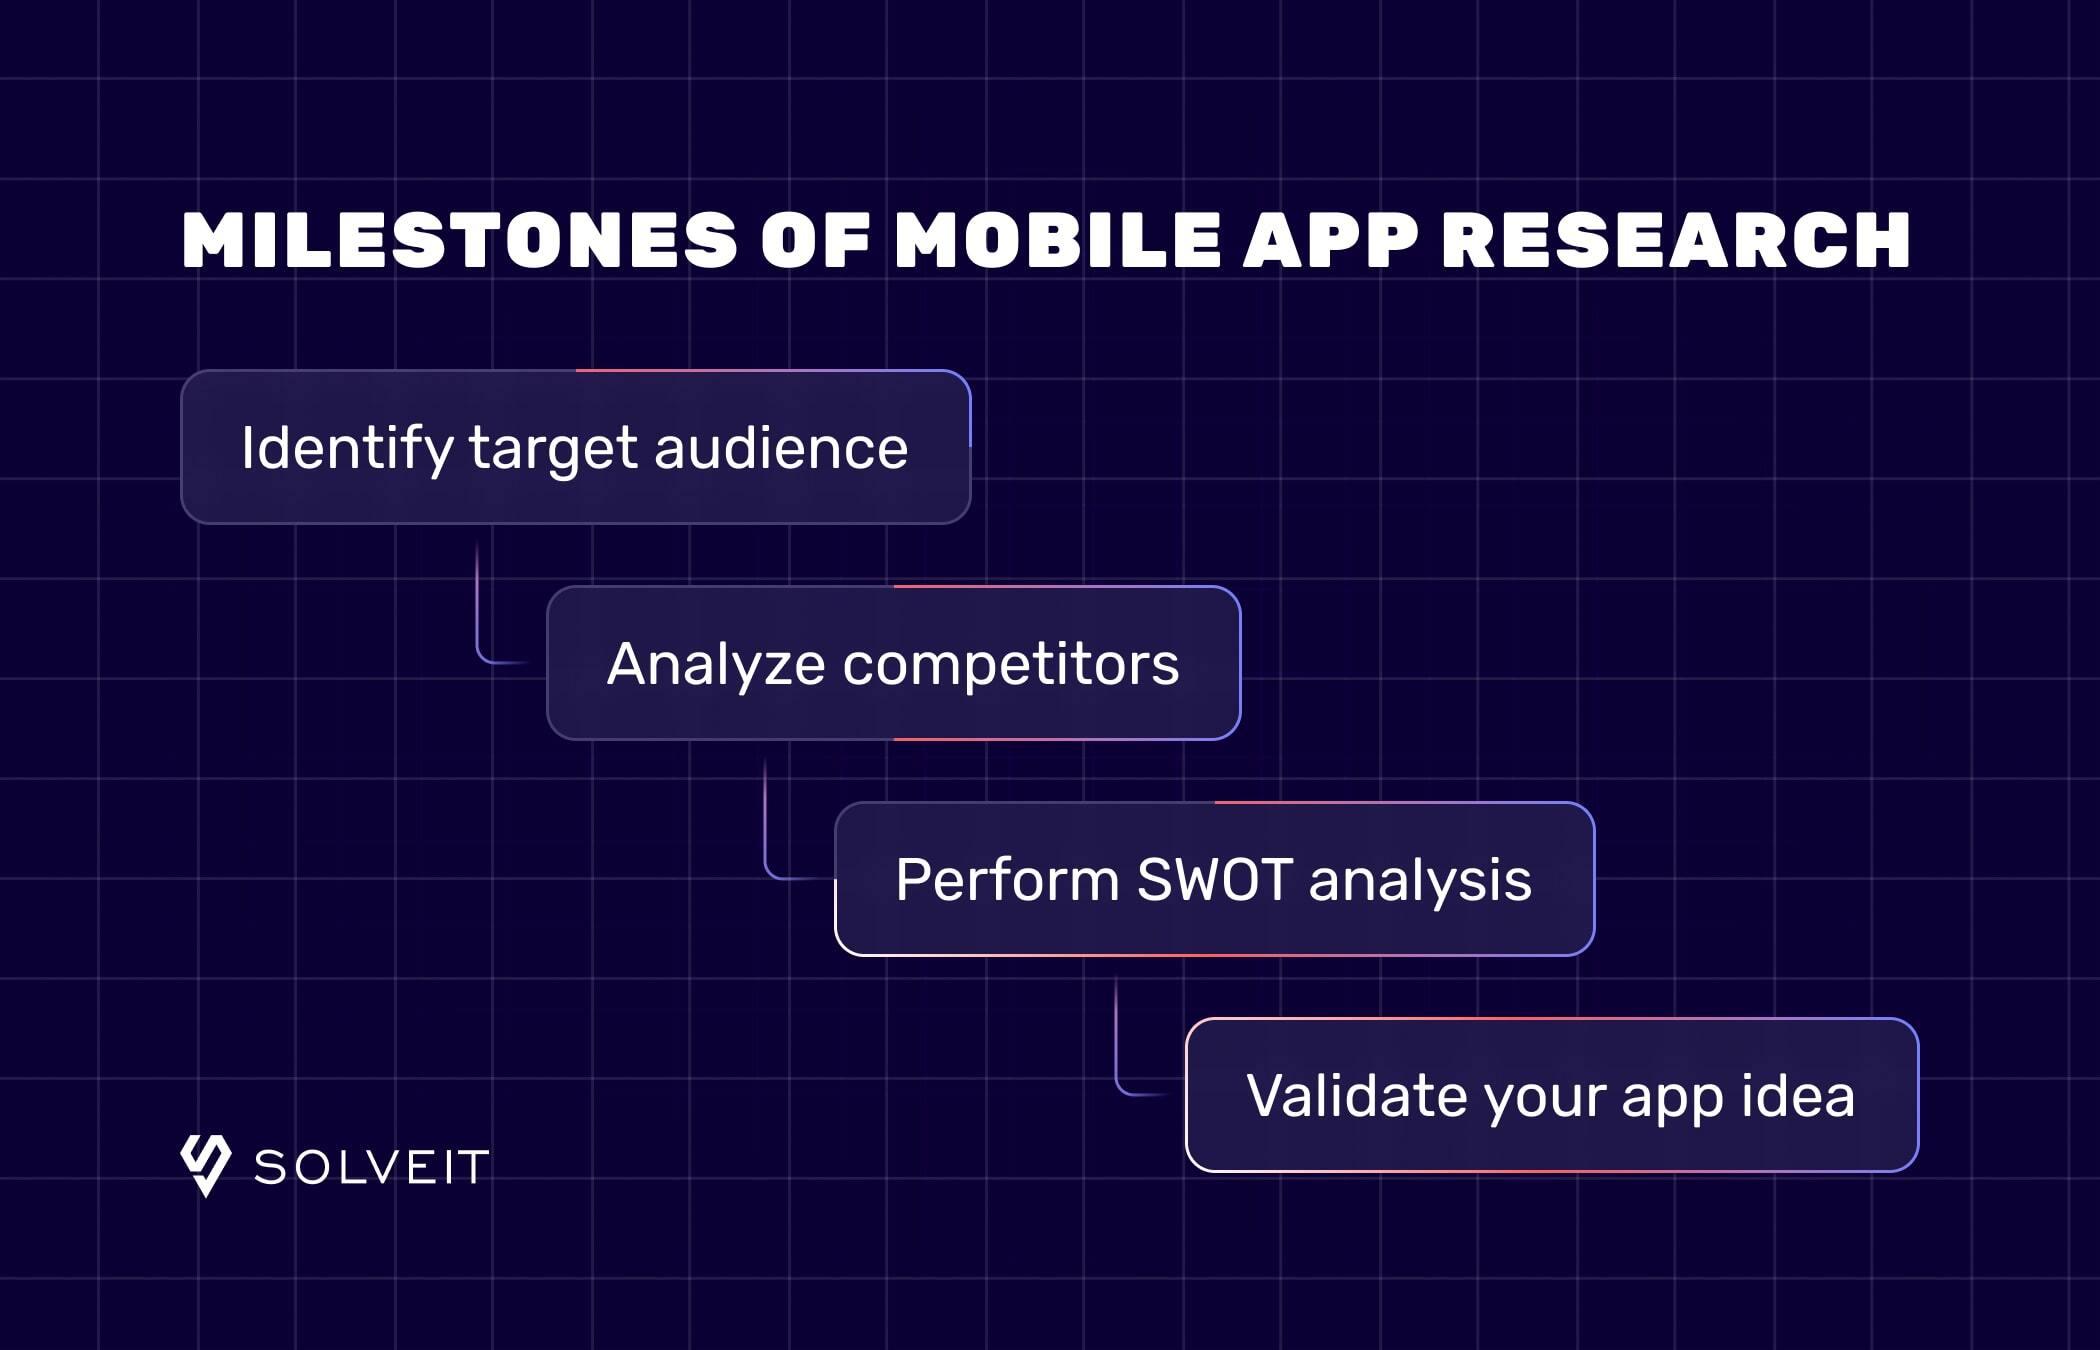 Mobile app market research milestones